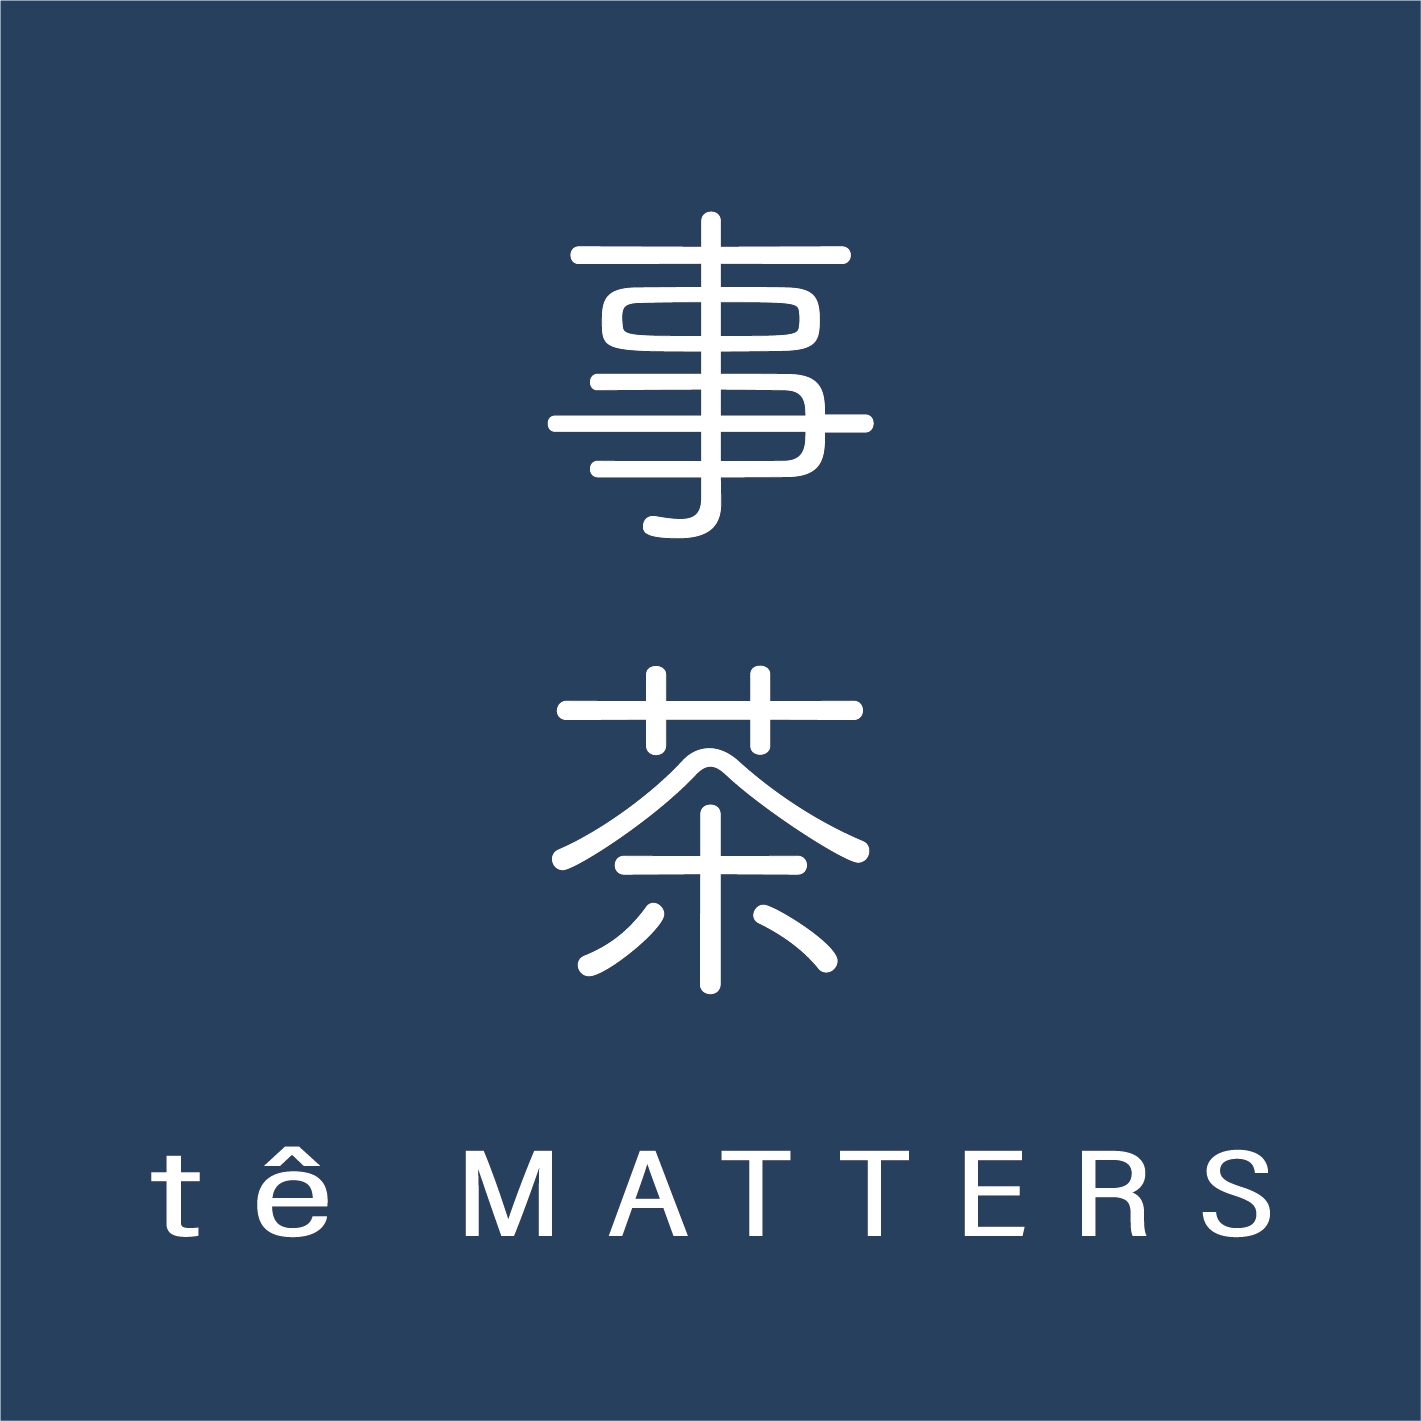 tê MATTERS 事茶文化創意有限公司 te MATTERS